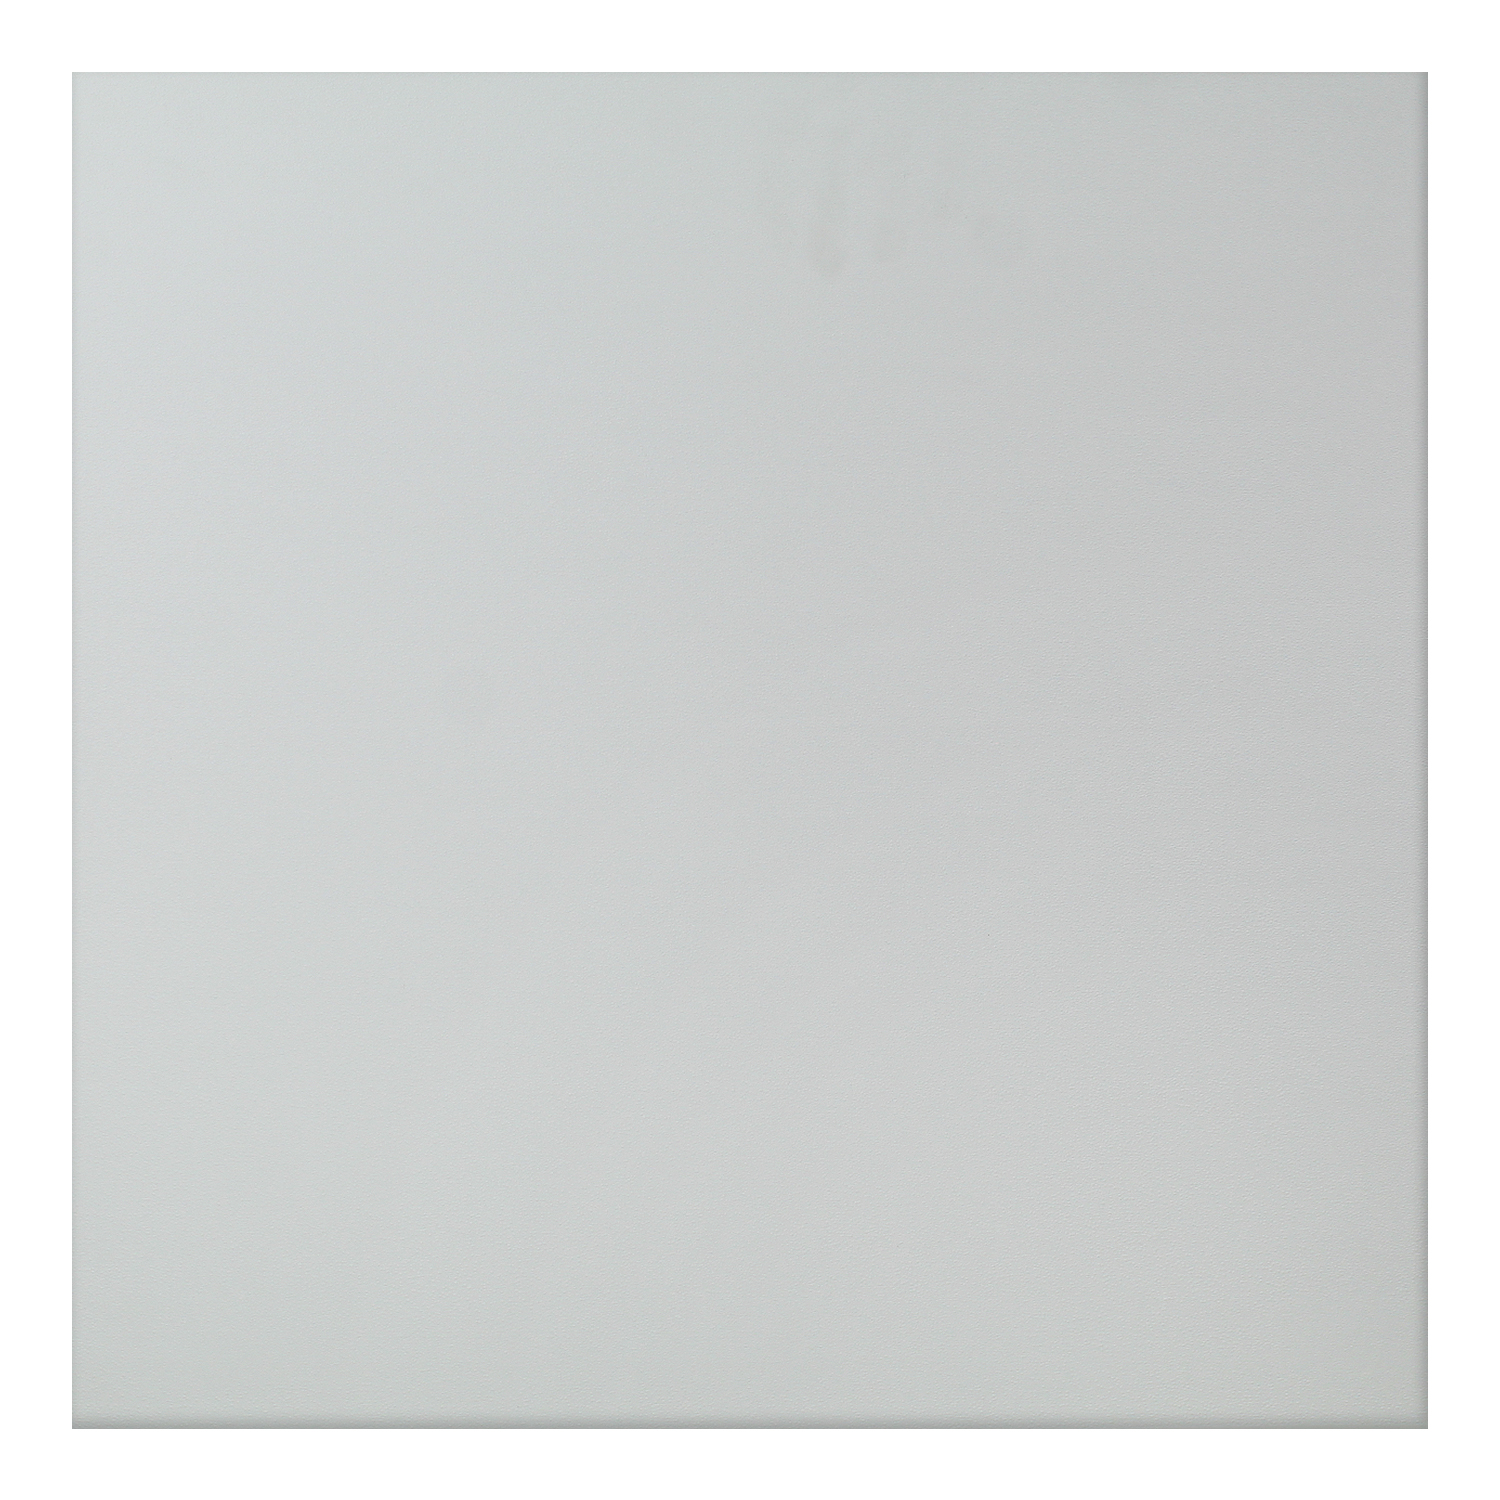 VINYL FACED Silver Foil Back Ceiling Tiles 1200mm x600mm (8 per box)